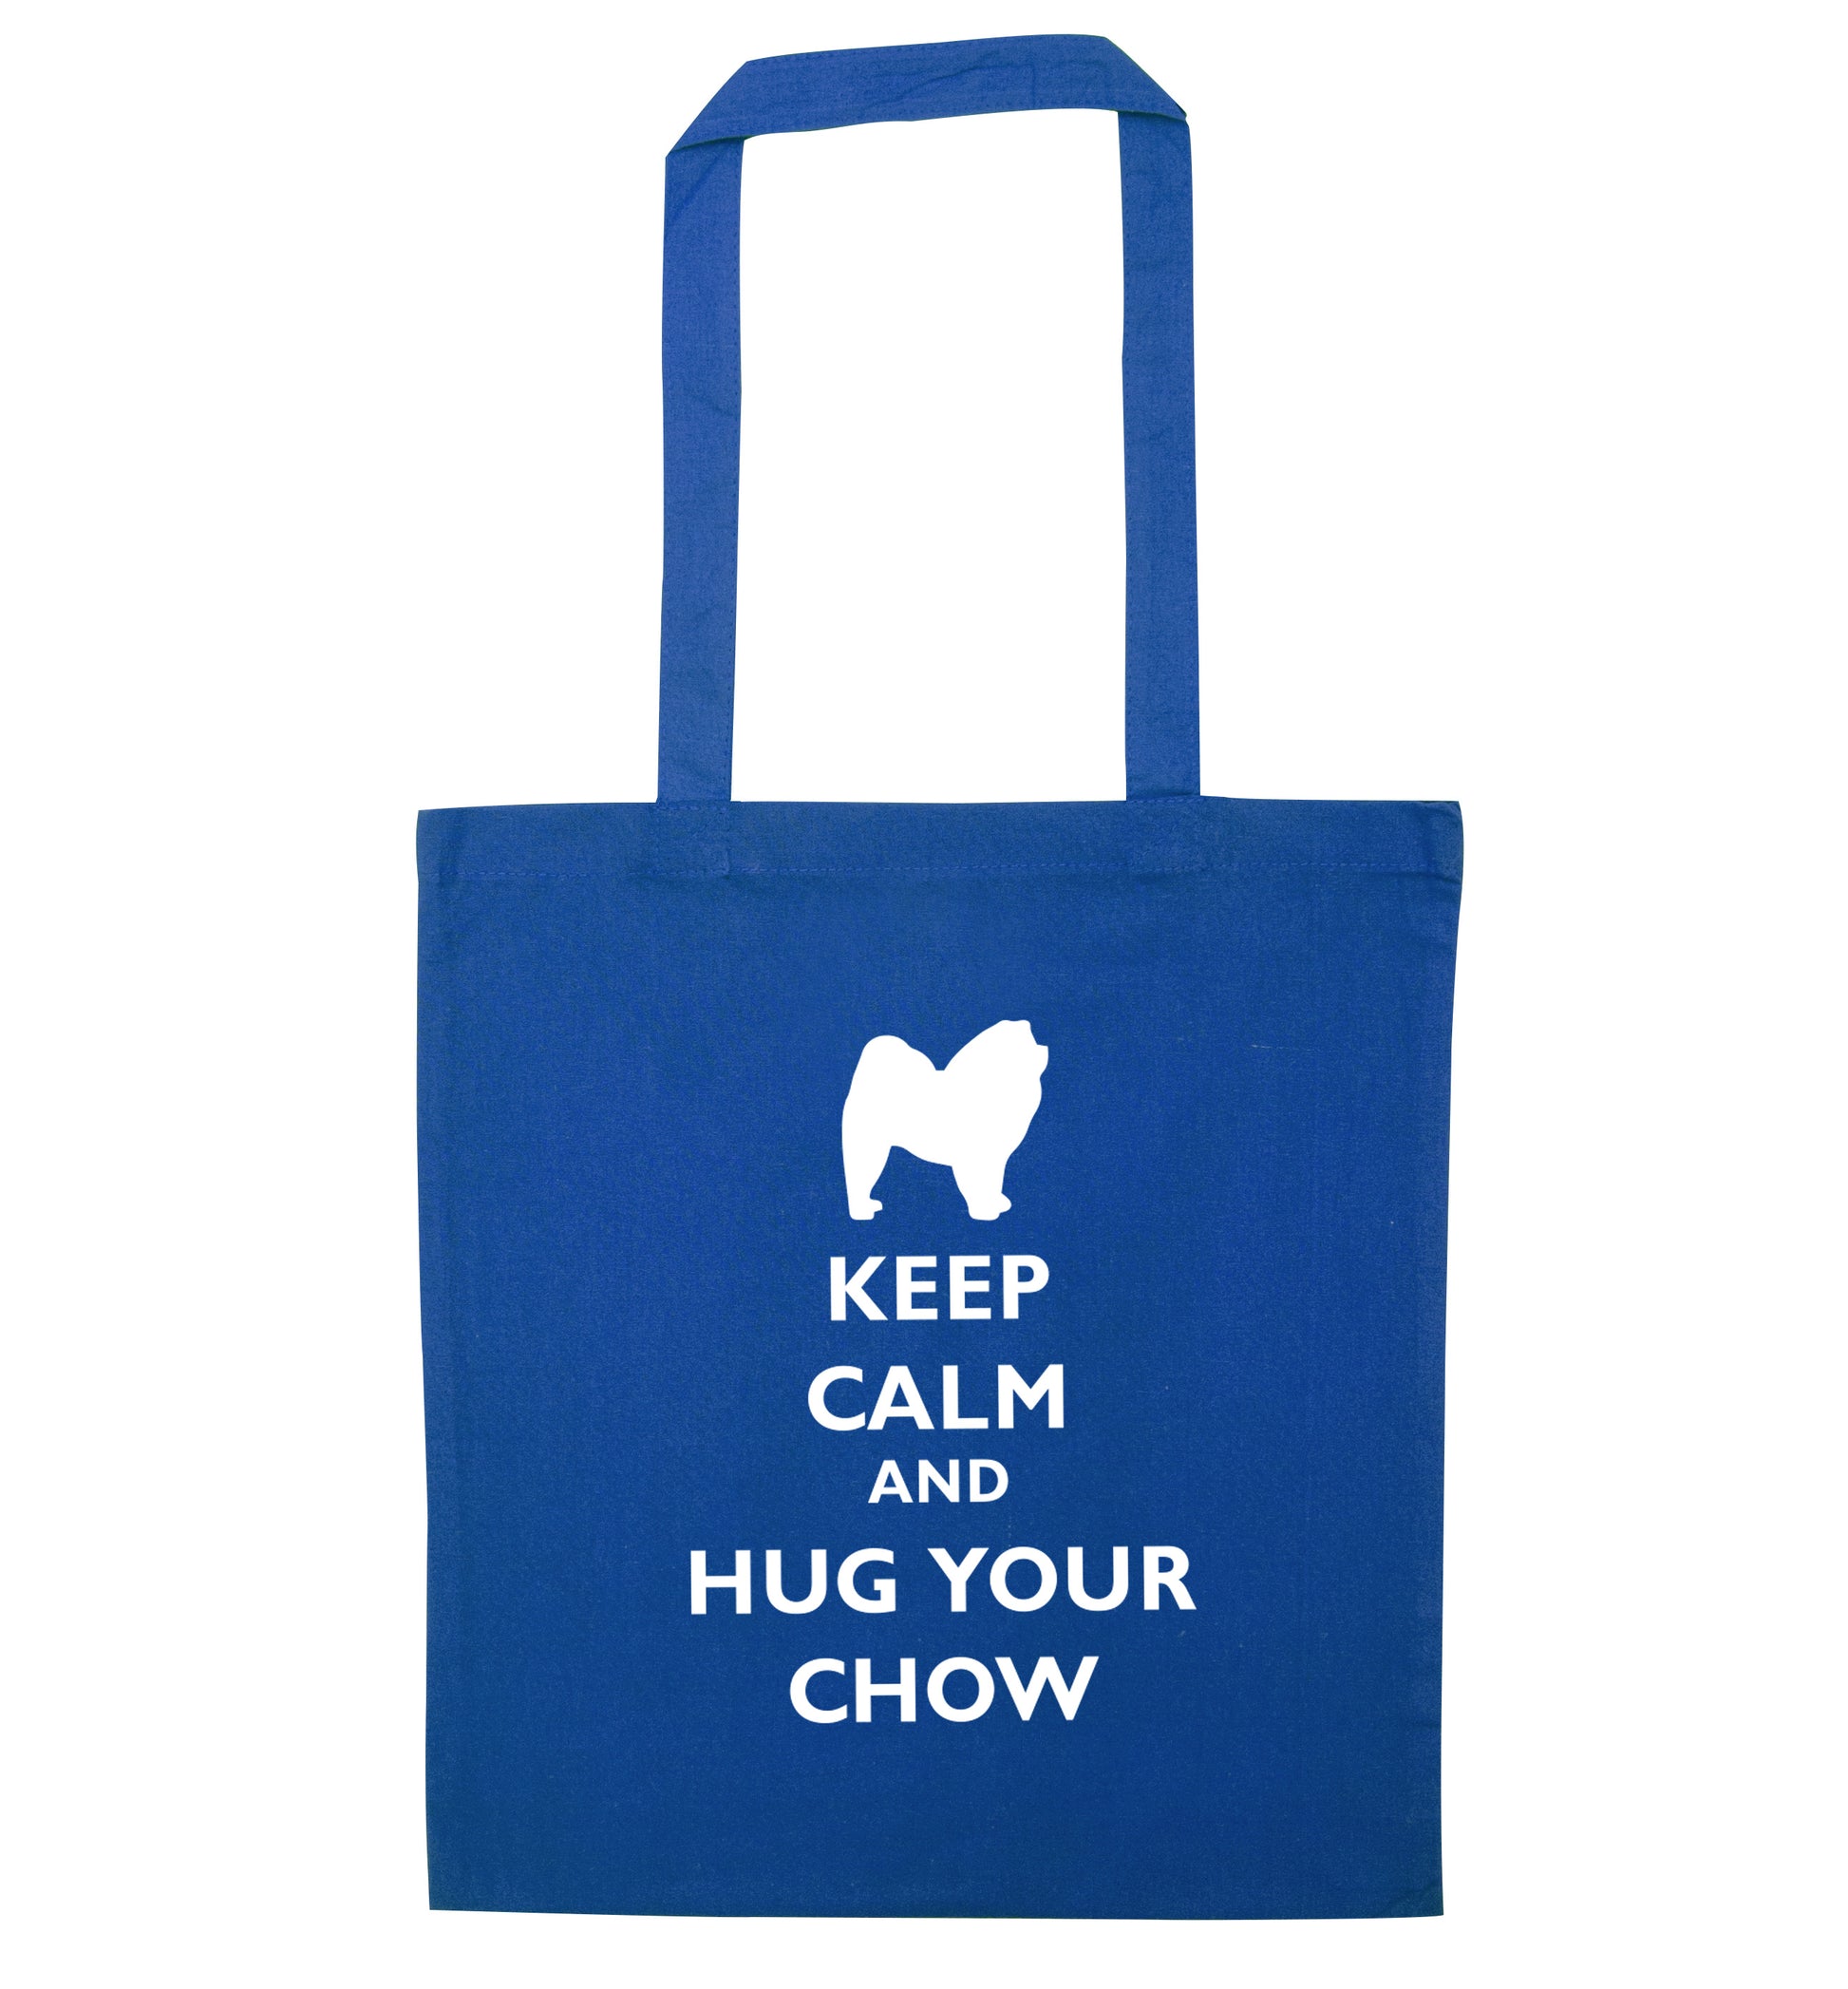 Keep calm and hug your chow blue tote bag